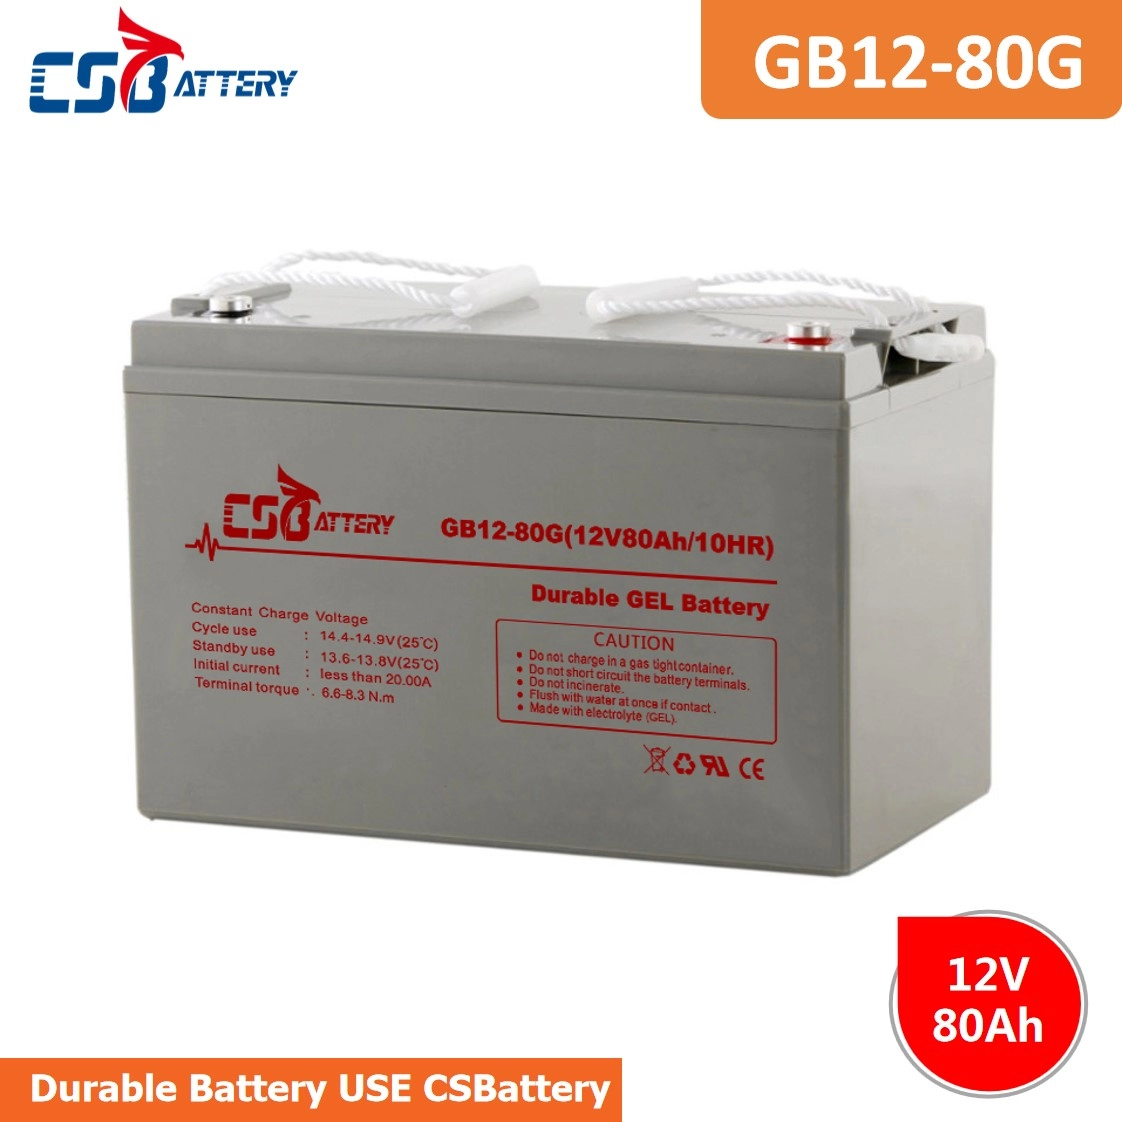 GB12-80G 12V 80Ah Durable Long Life Gel Battery